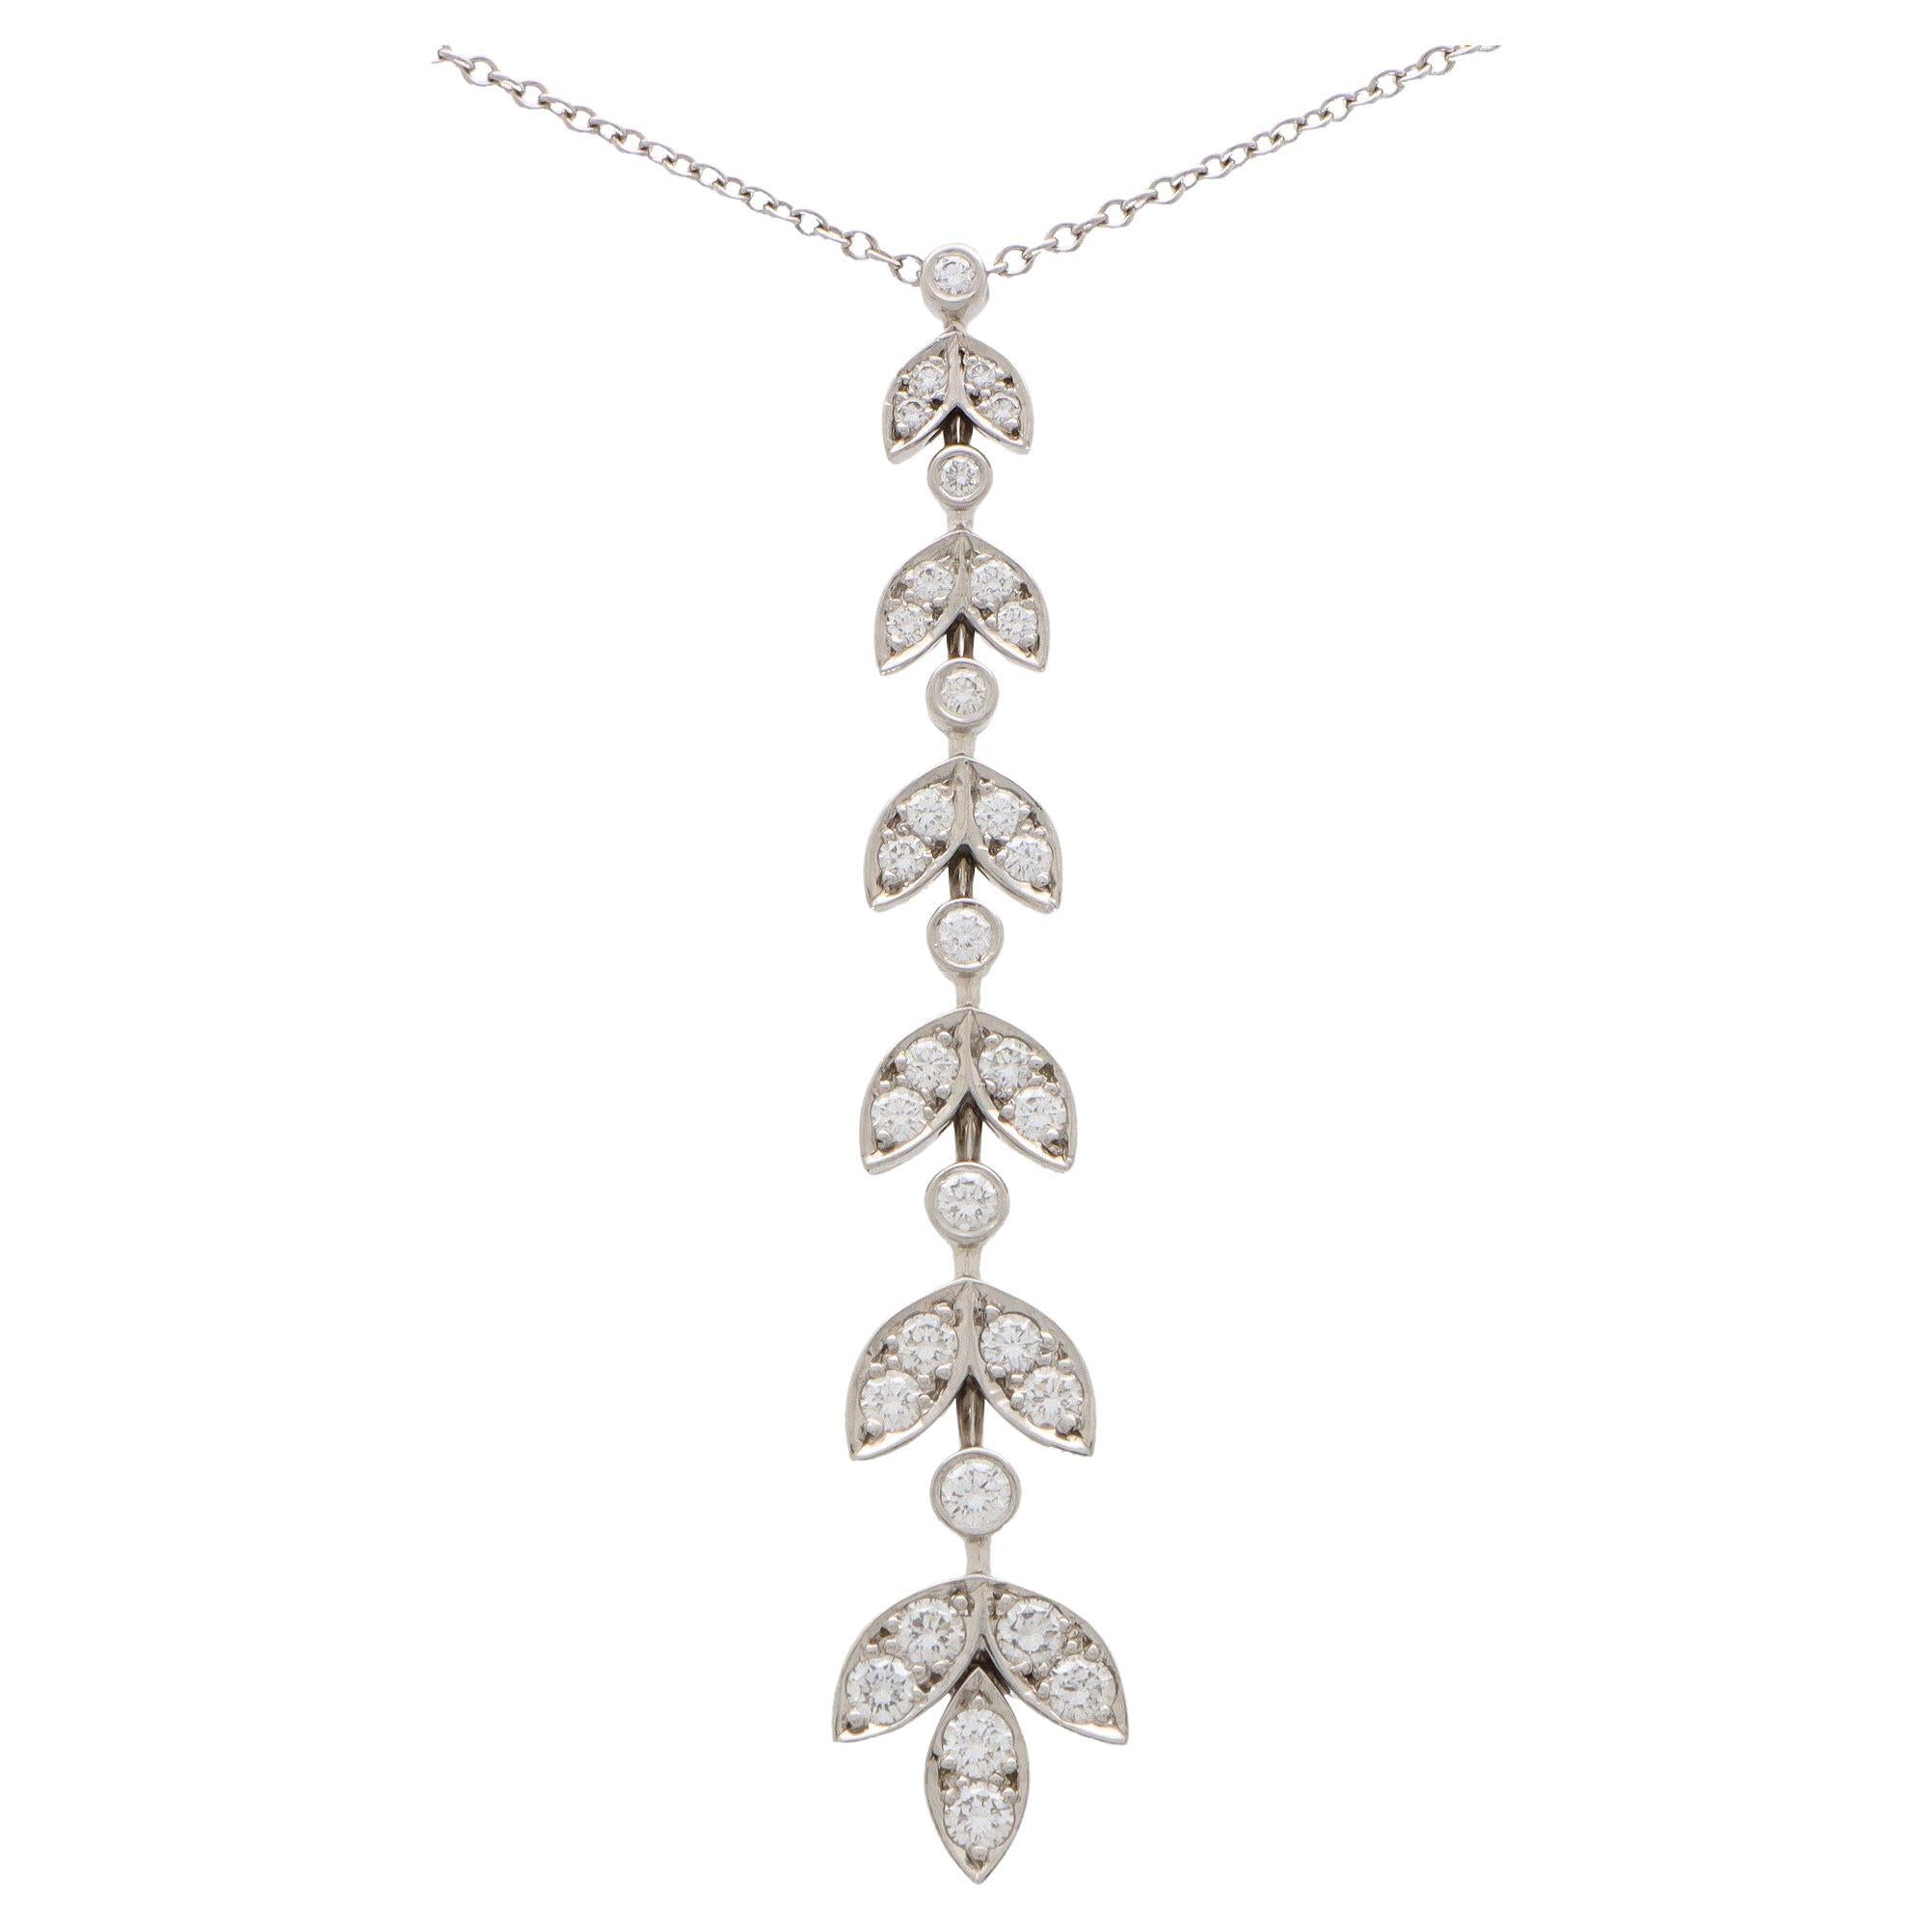 Vintage Tiffany & Co. Diamond ‘Wisteria’ Pendant Necklace Set in Platinum